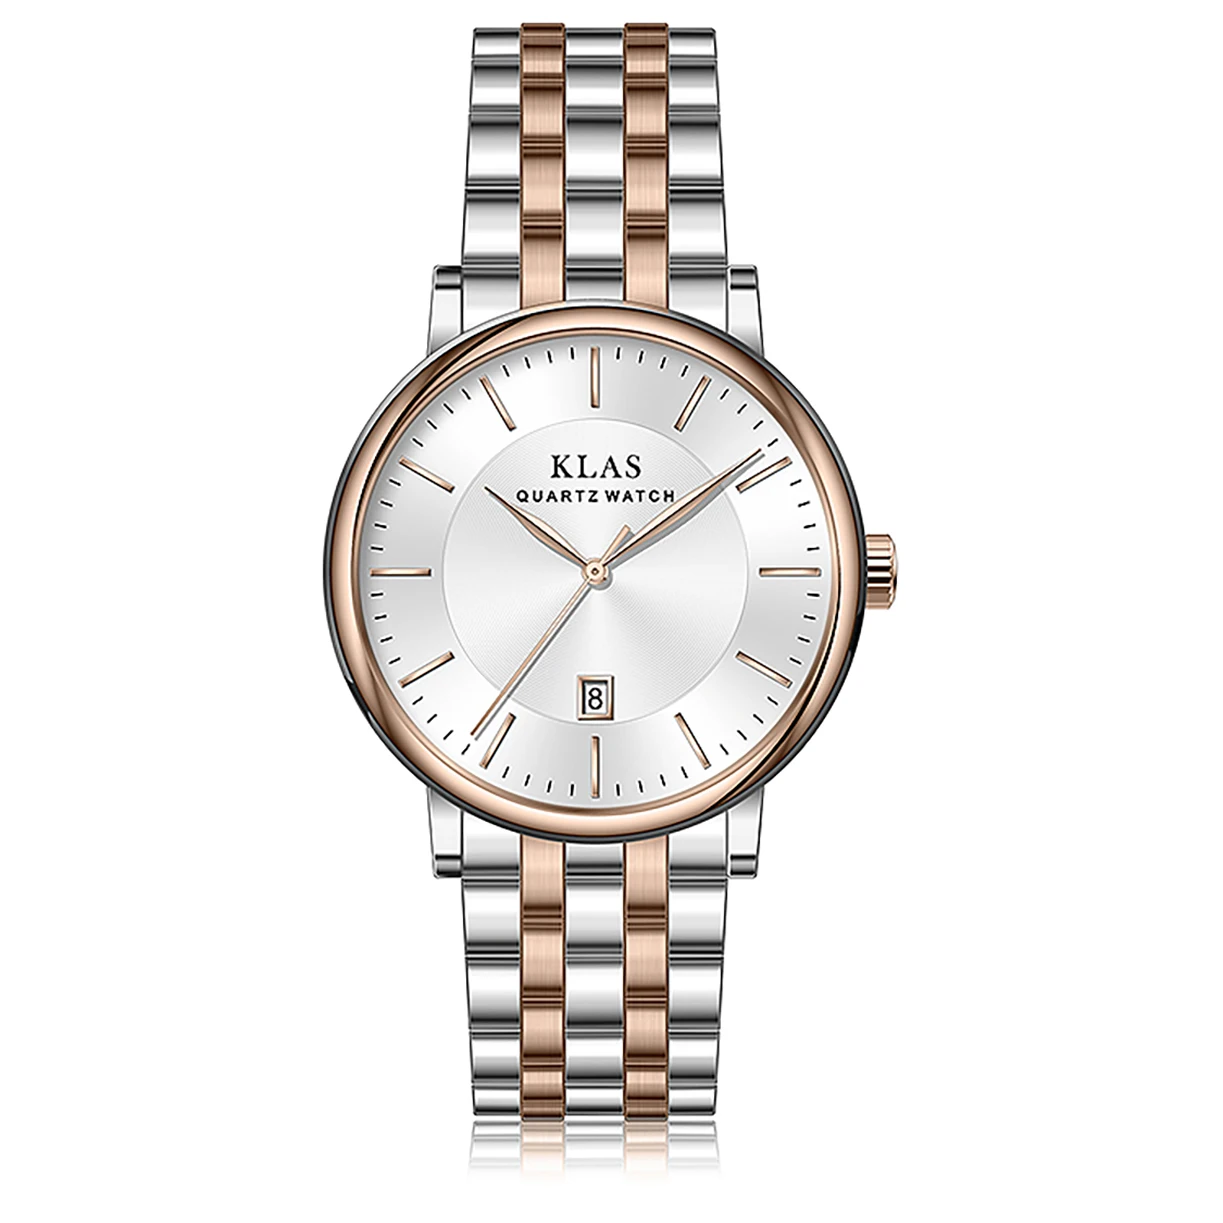 Clock men Wrist Watch KLAS brand